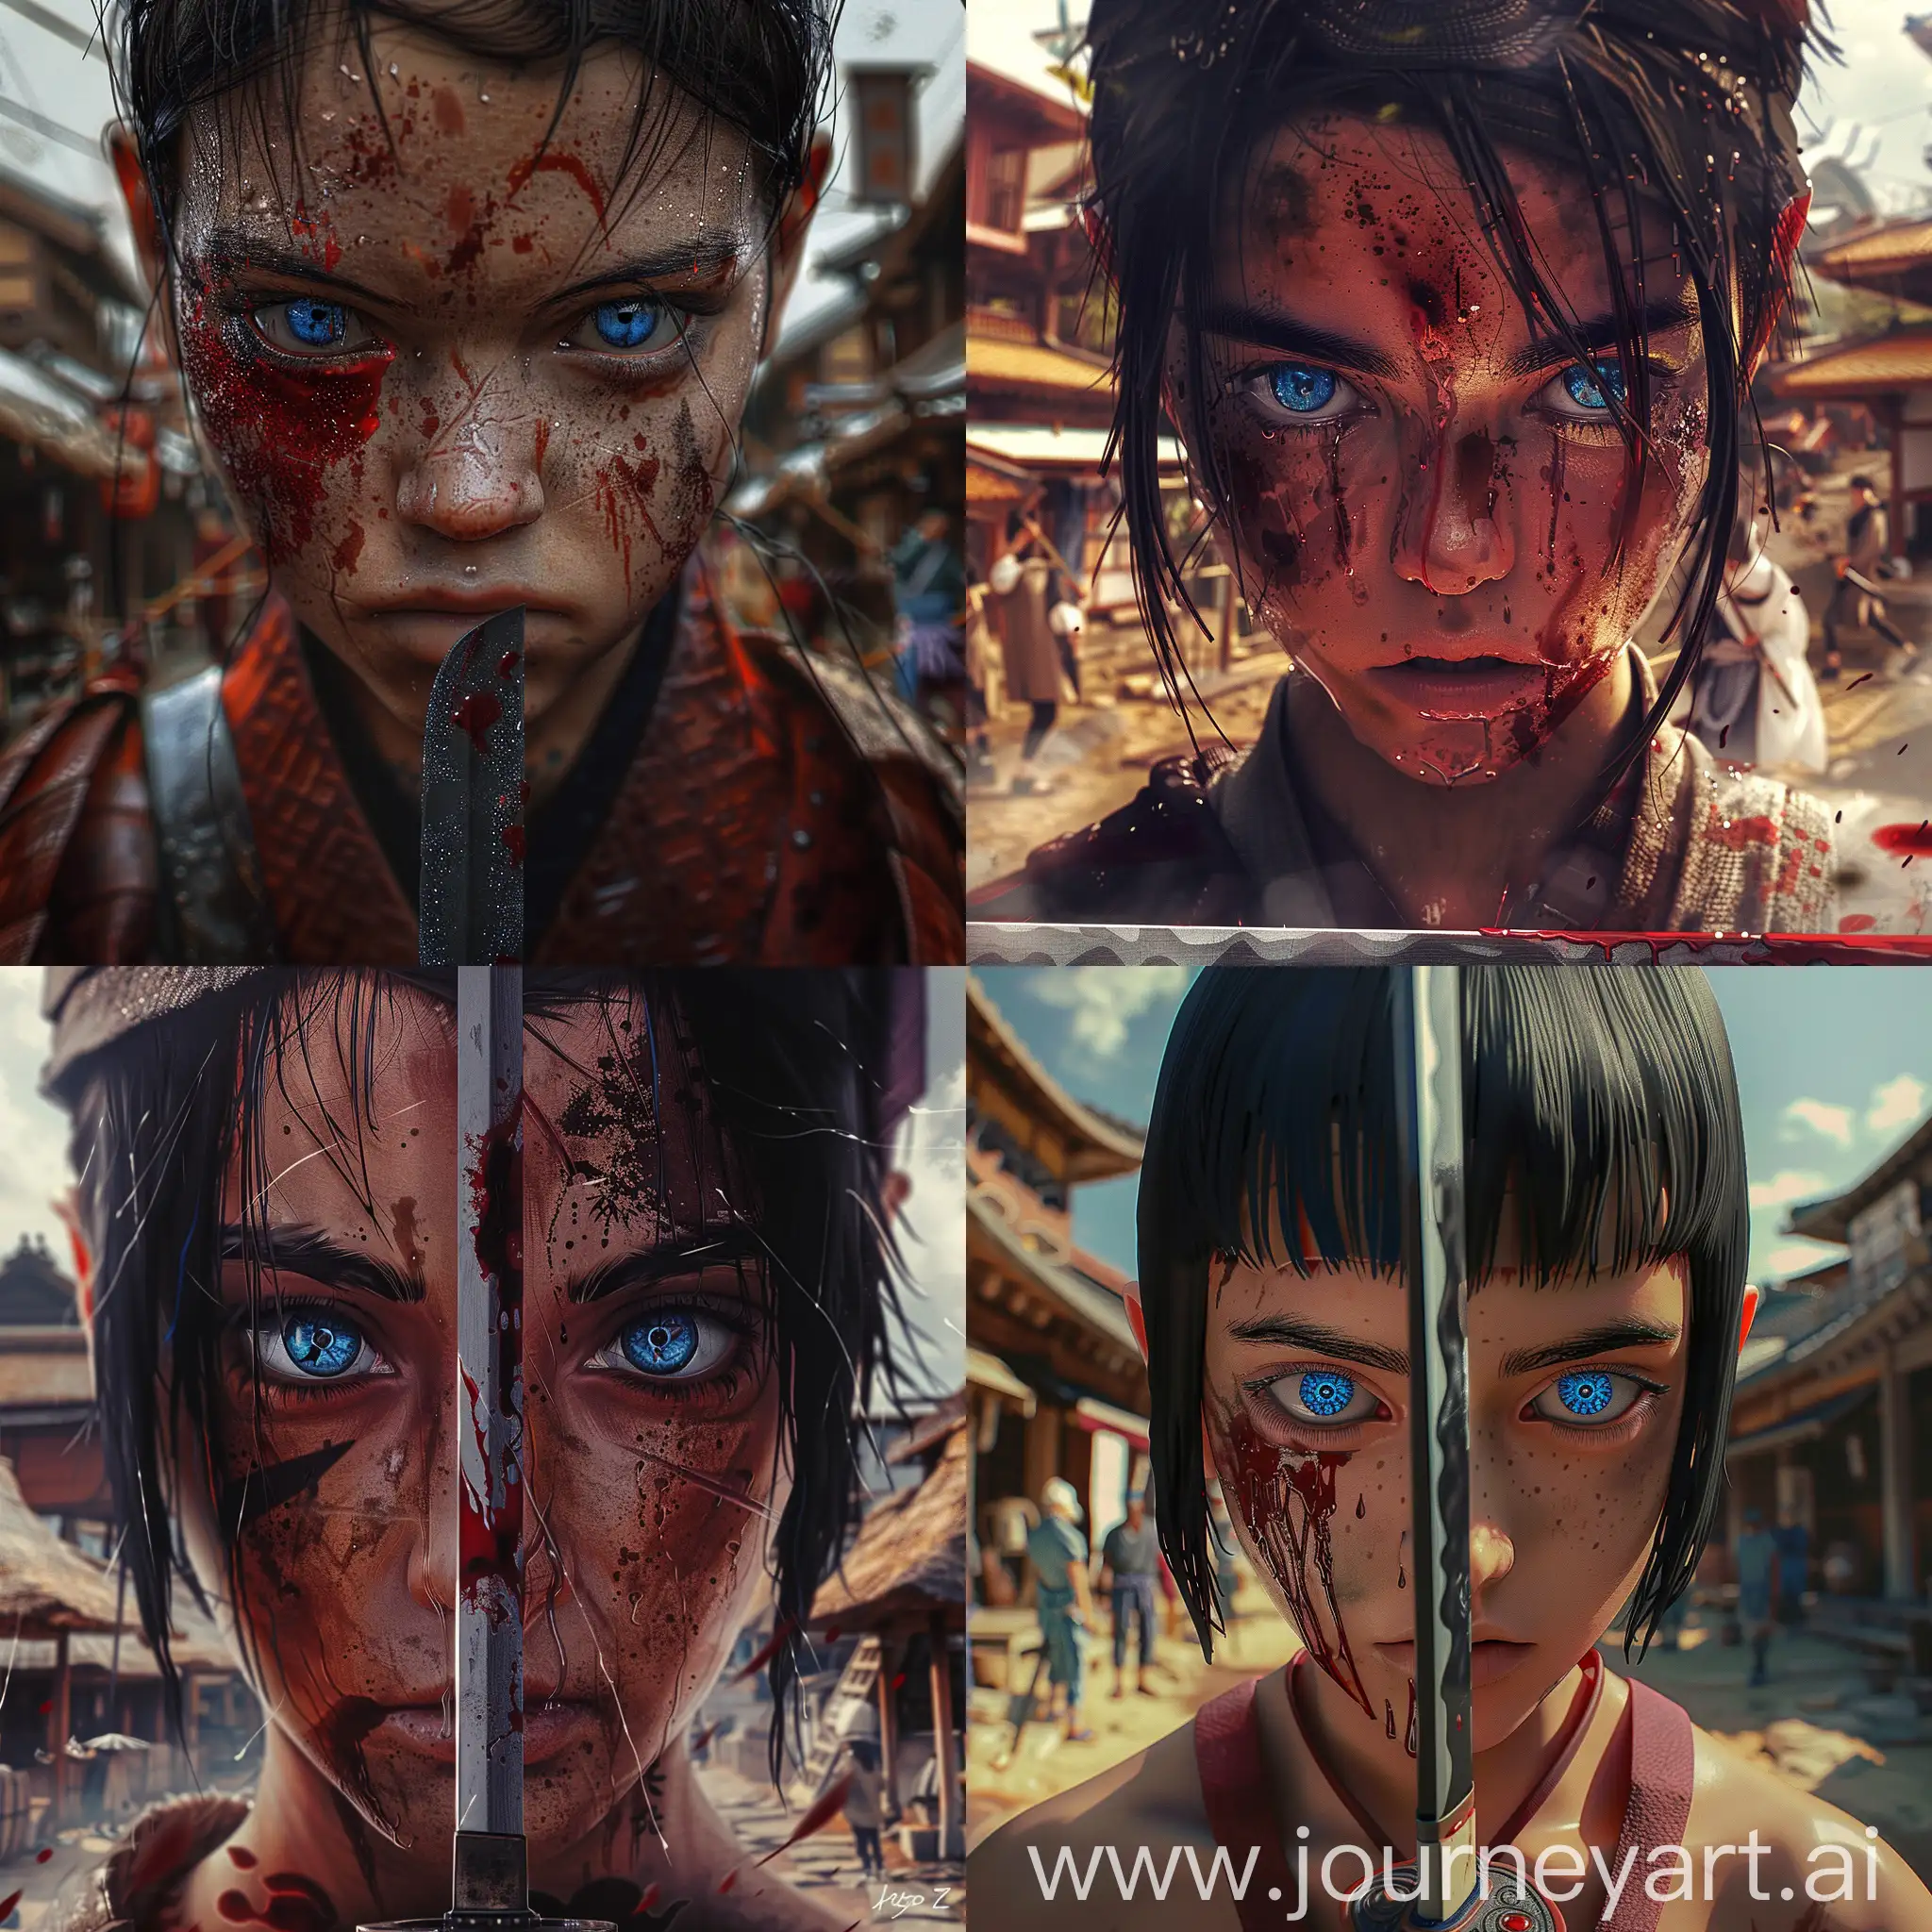 Fierce-Samurai-Warrior-with-Blue-Eyes-in-HyperRealistic-Anime-Style